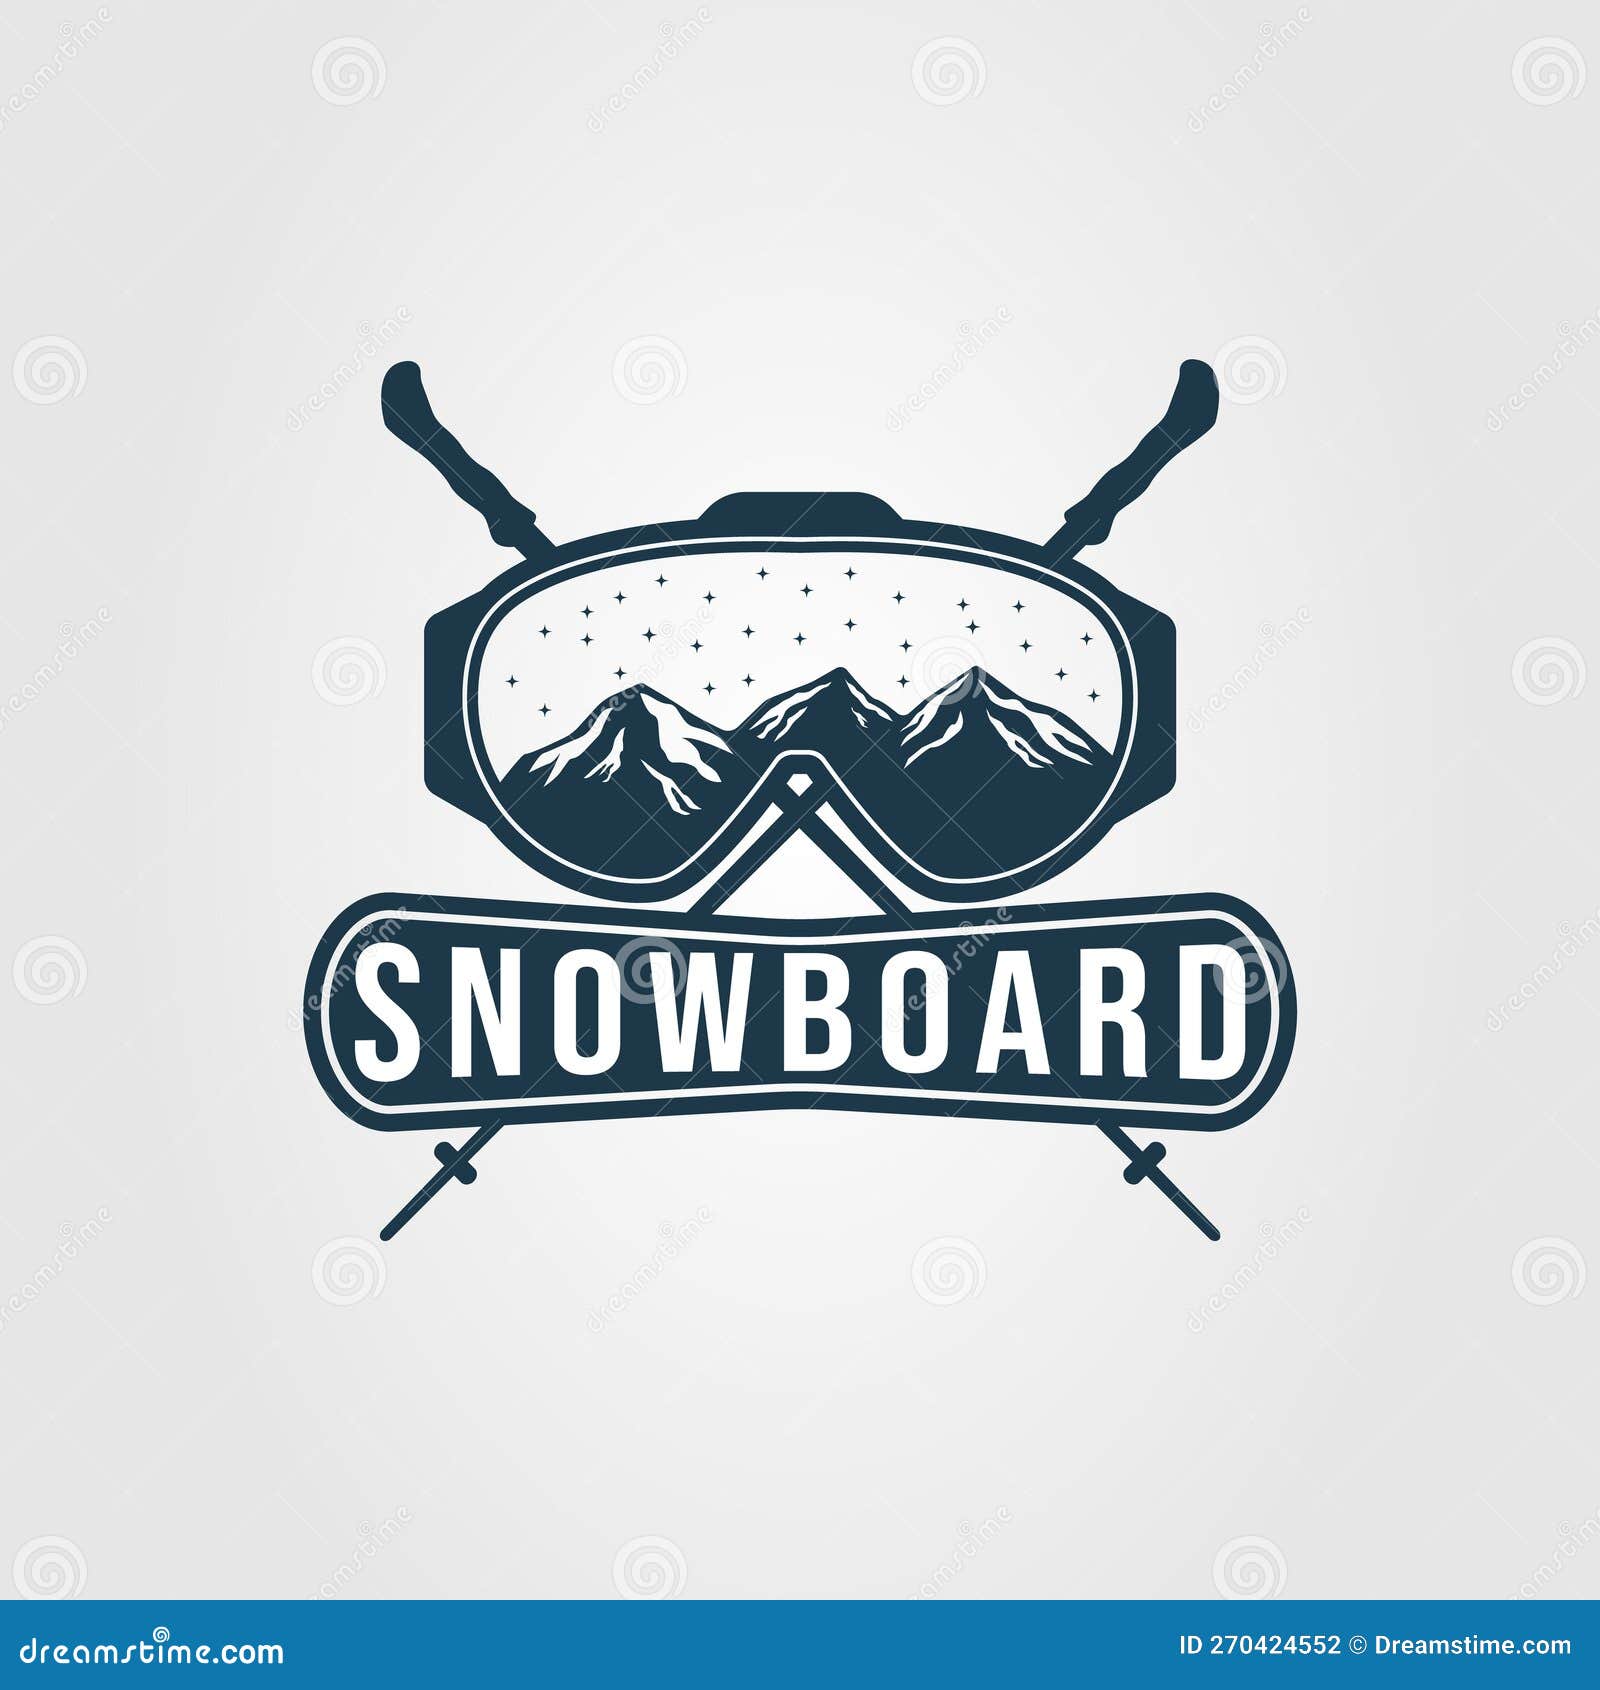 Snowboard Goggle Glasses with Mountain Logo Vector Illustration Design ...